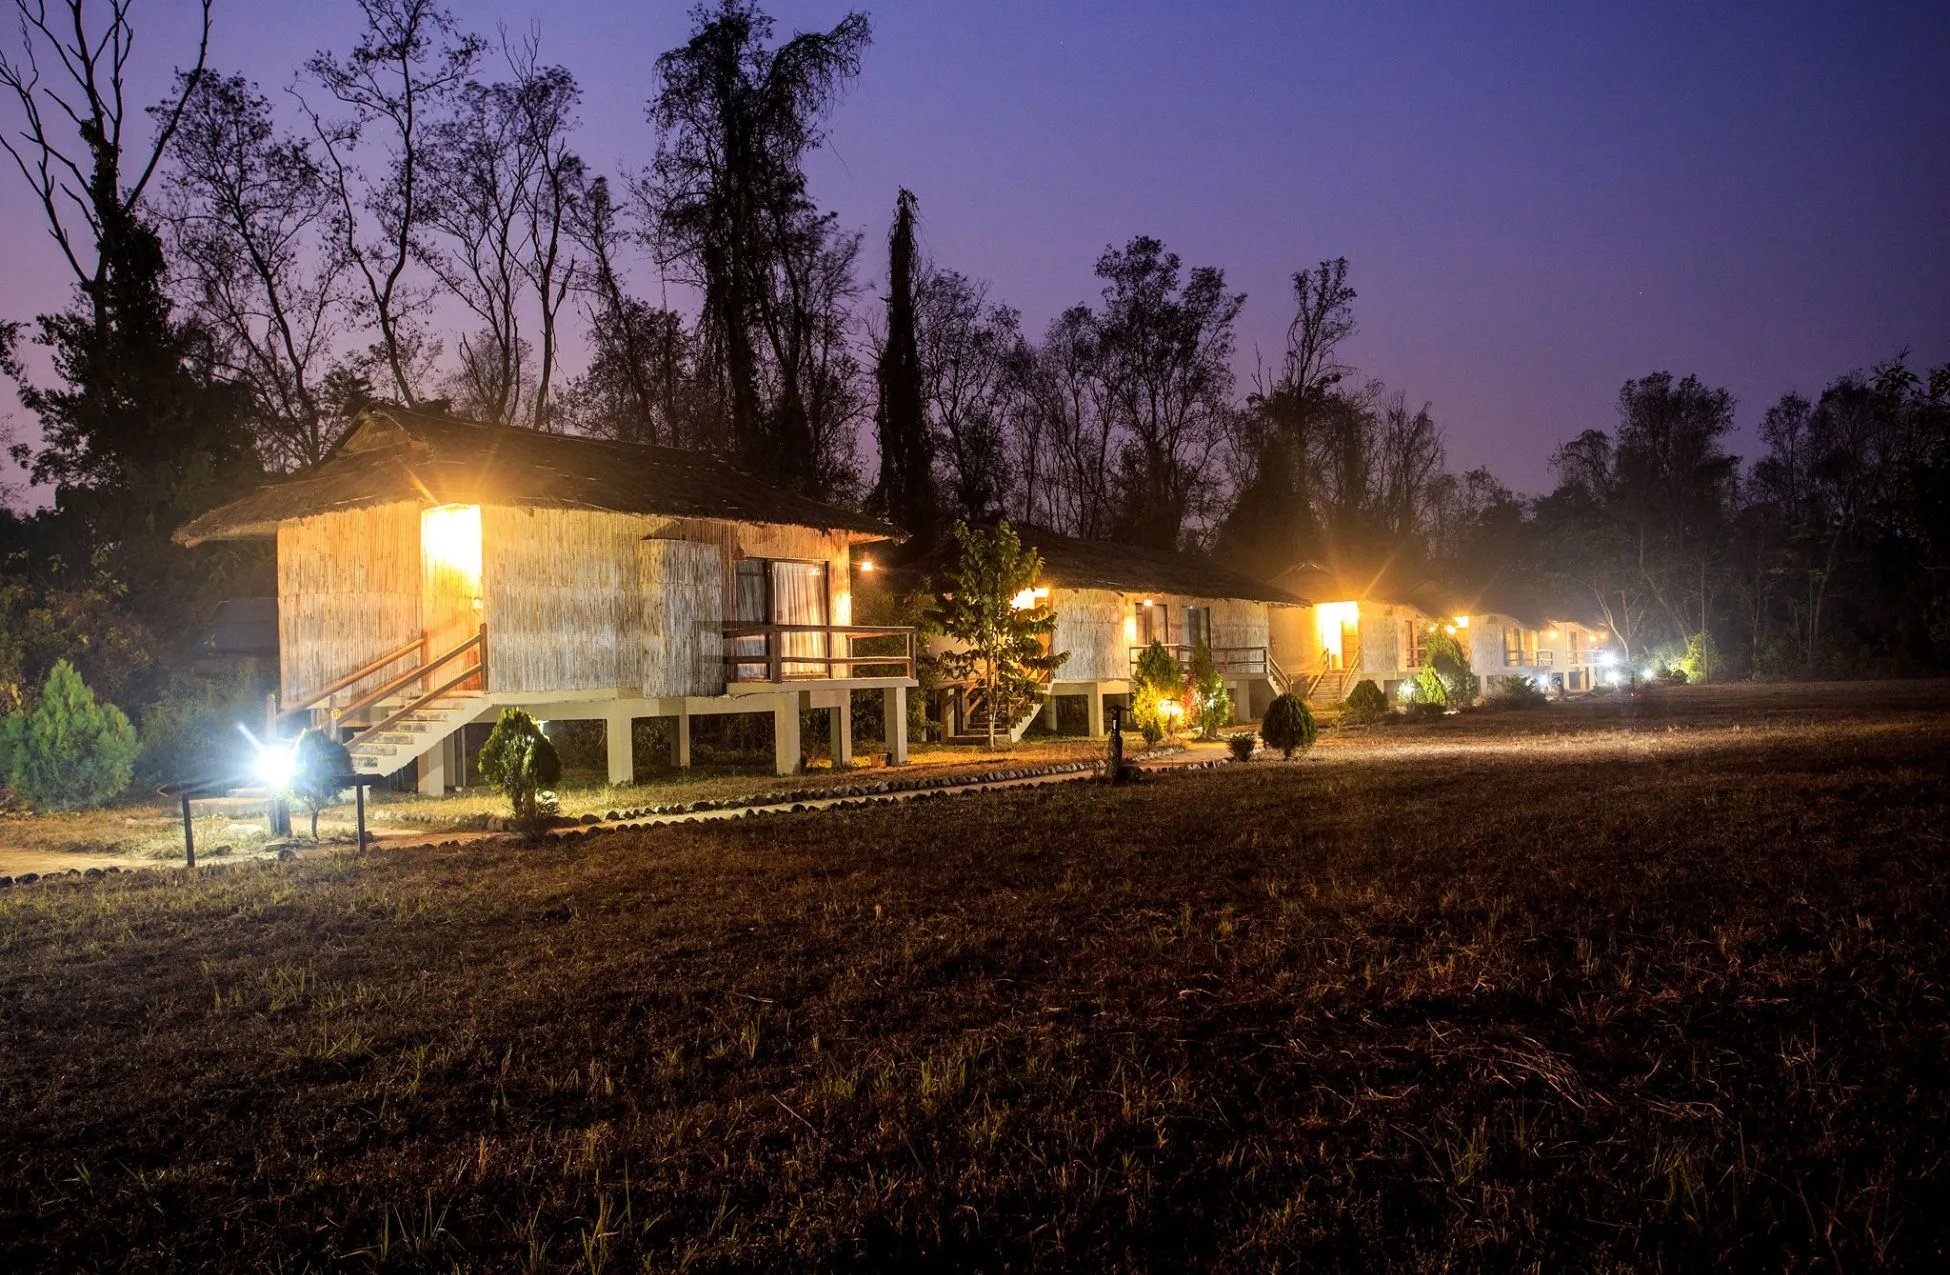 Temple Tiger Green Jungle Resort - Best Hotels In Chitwan National Park Nepal